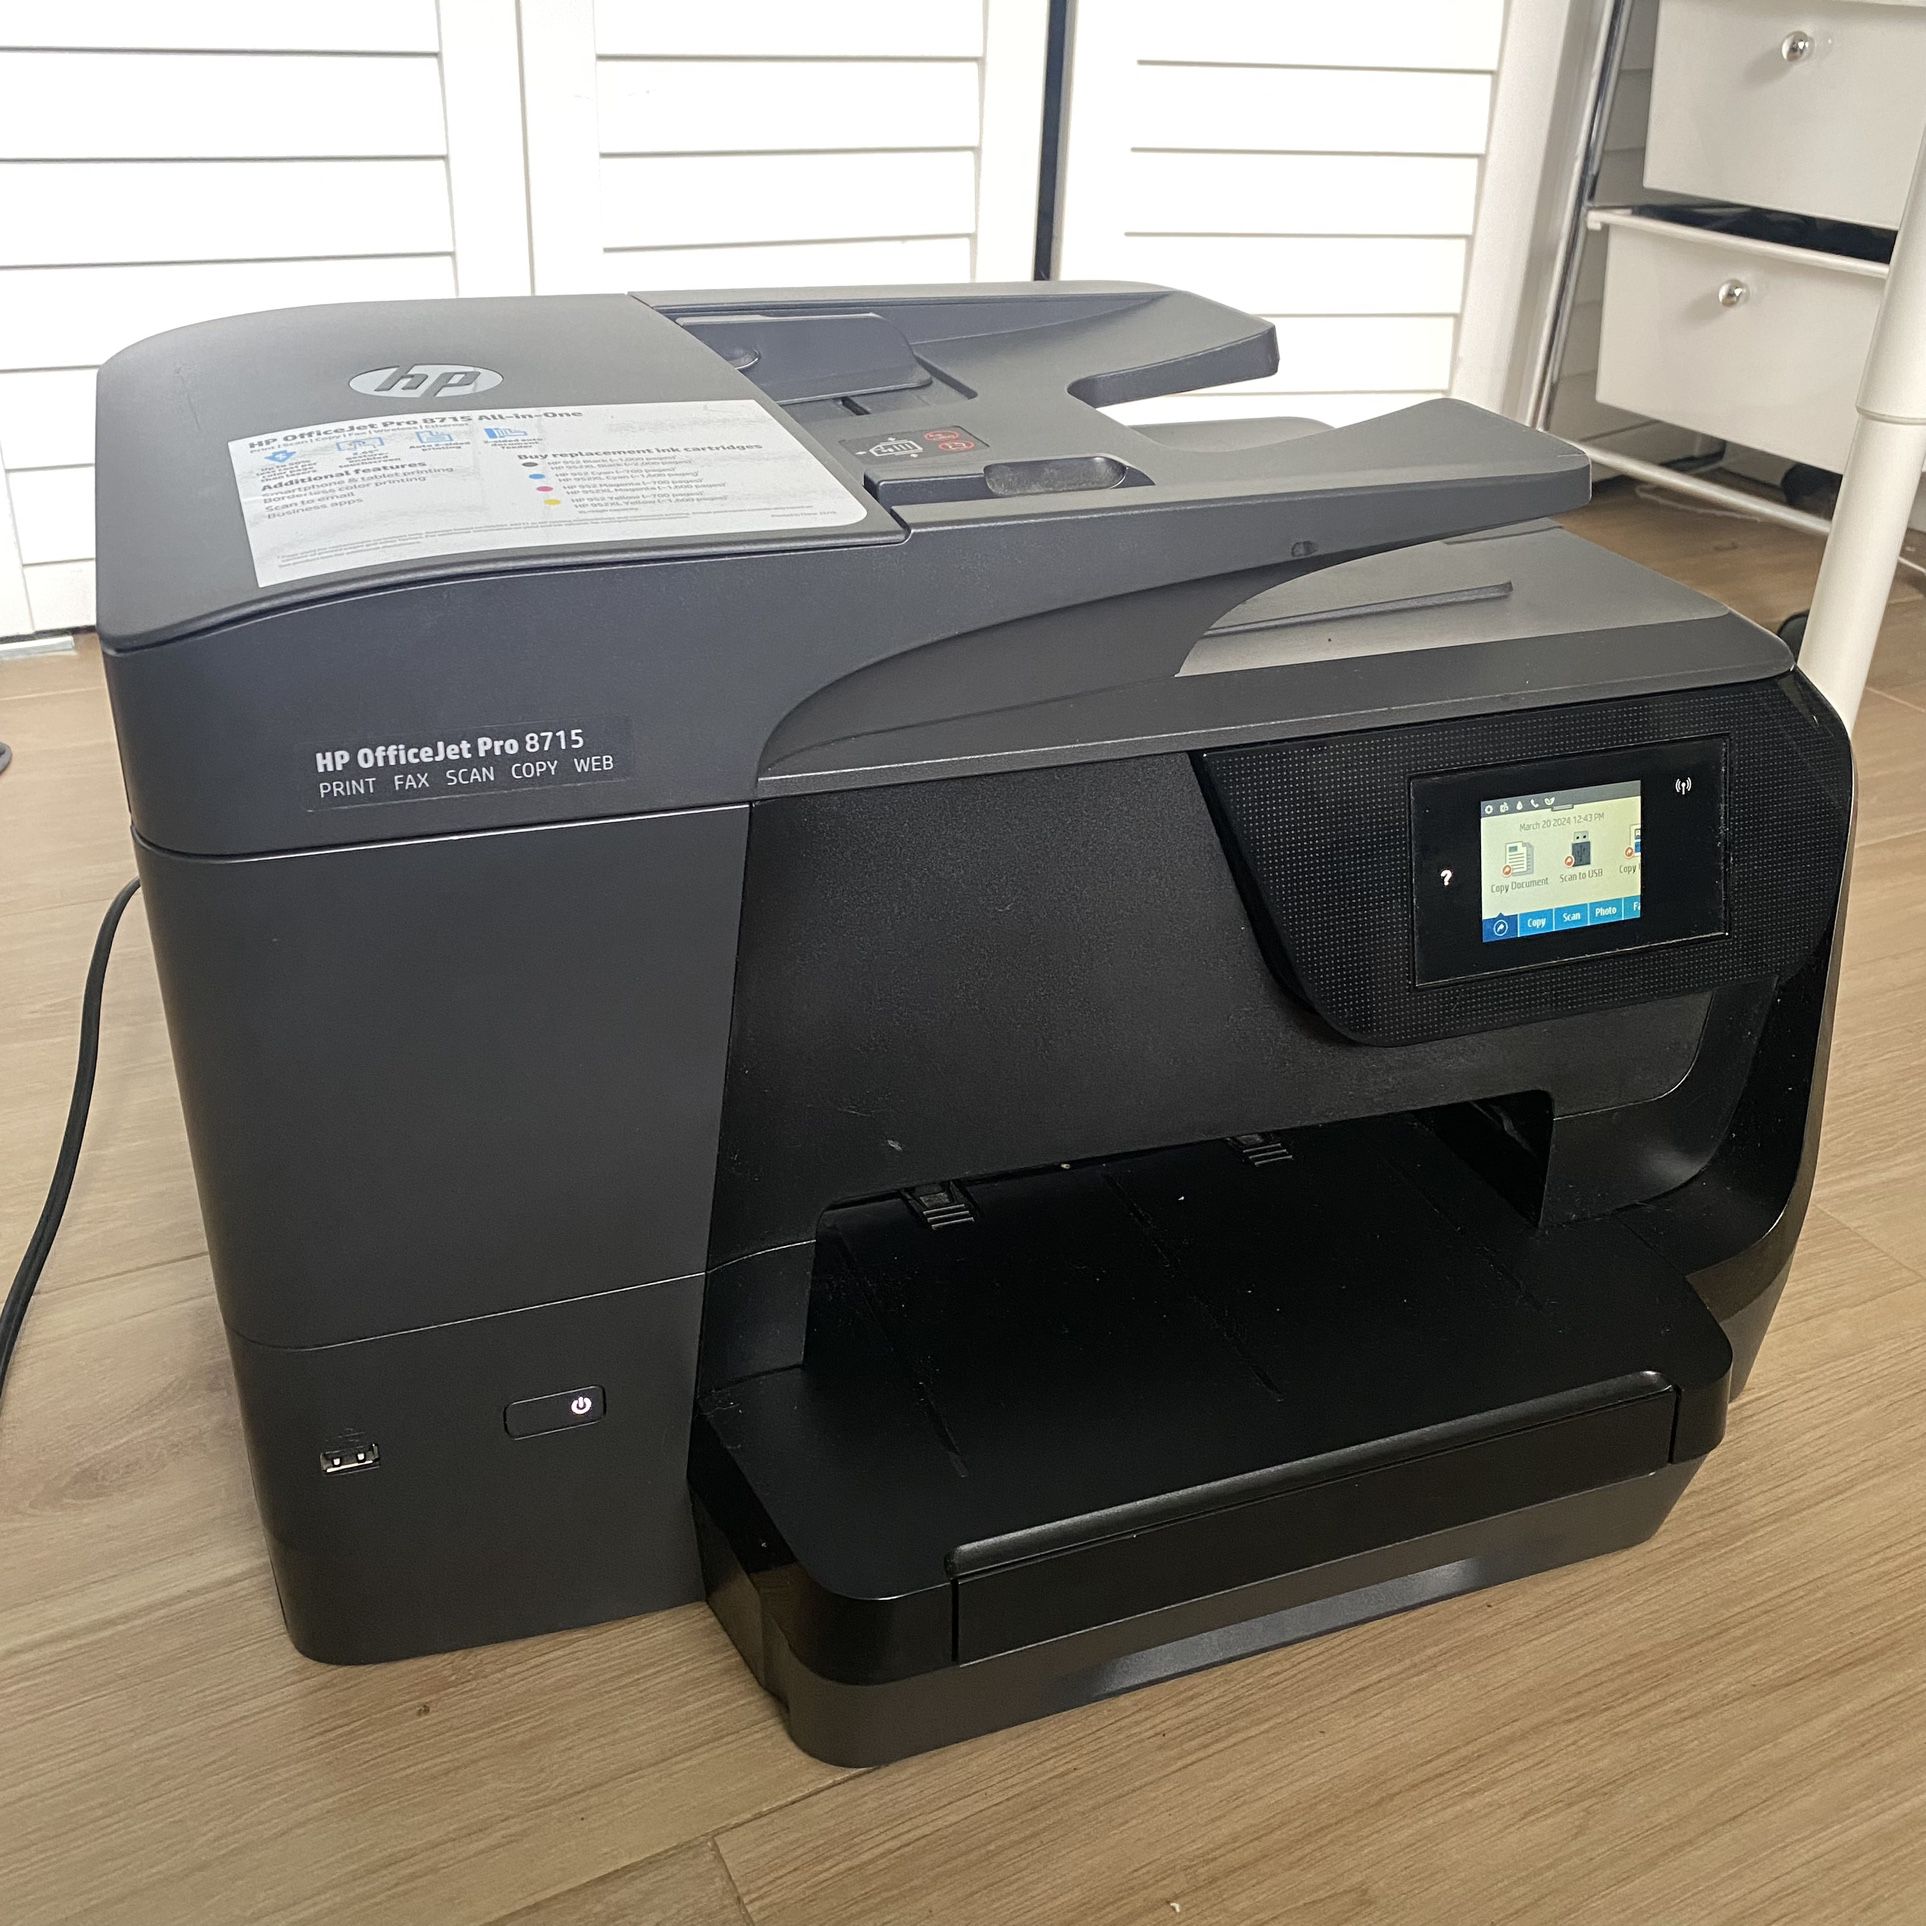 Office Jet Pro Printer 